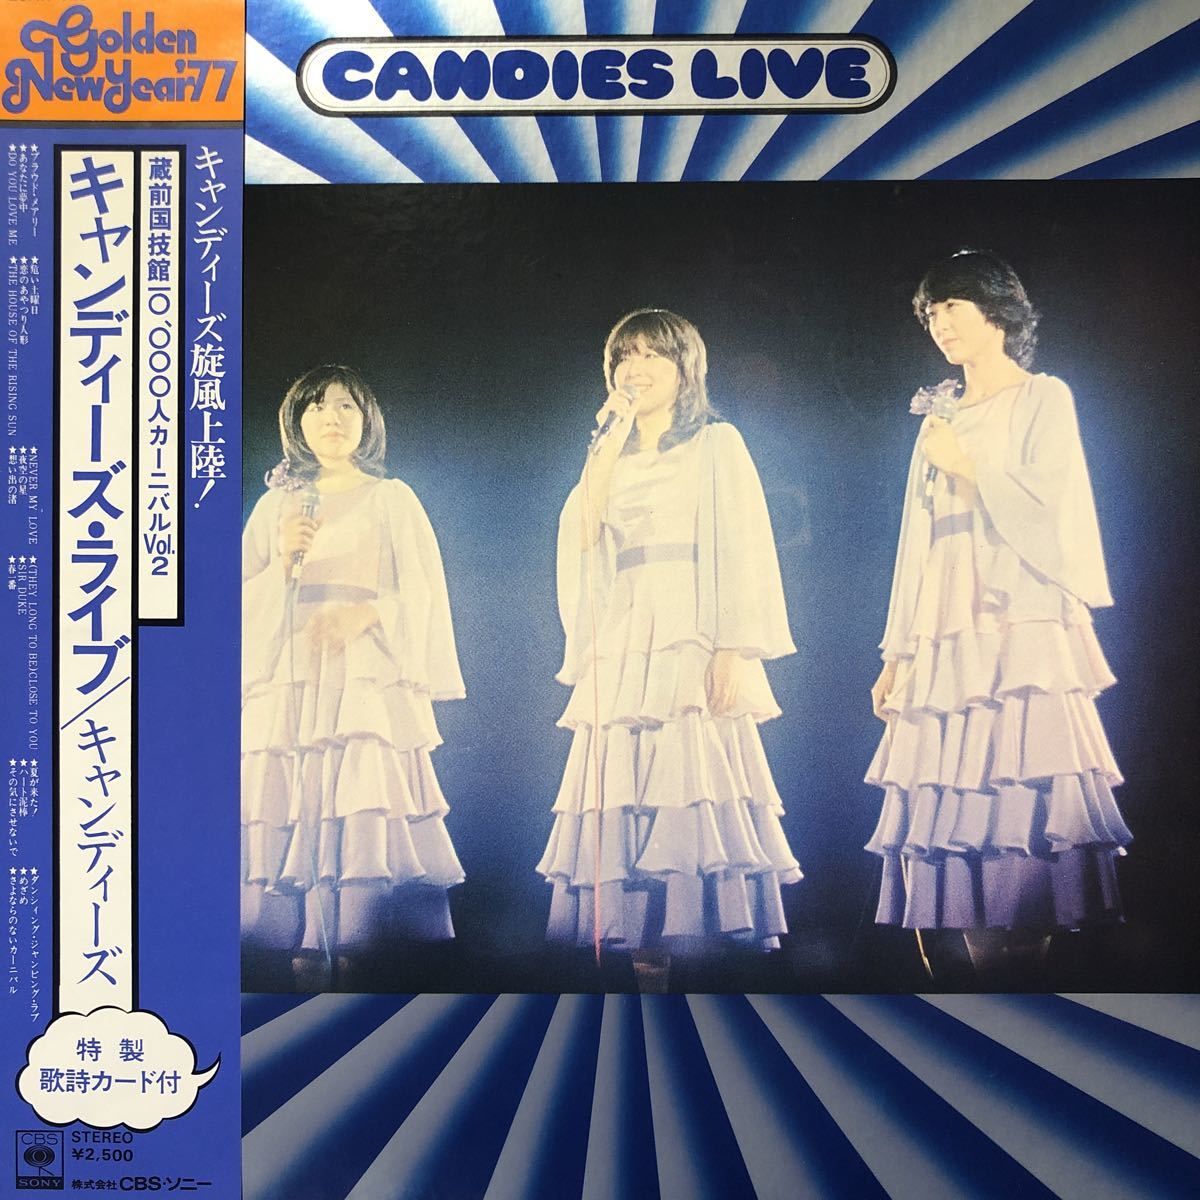 U -Band LP Candies Showa Idol Candies Live Kuramae Kokugikan 10000 человек карнавал Vol.2 Записи 5 или более успешных ставок